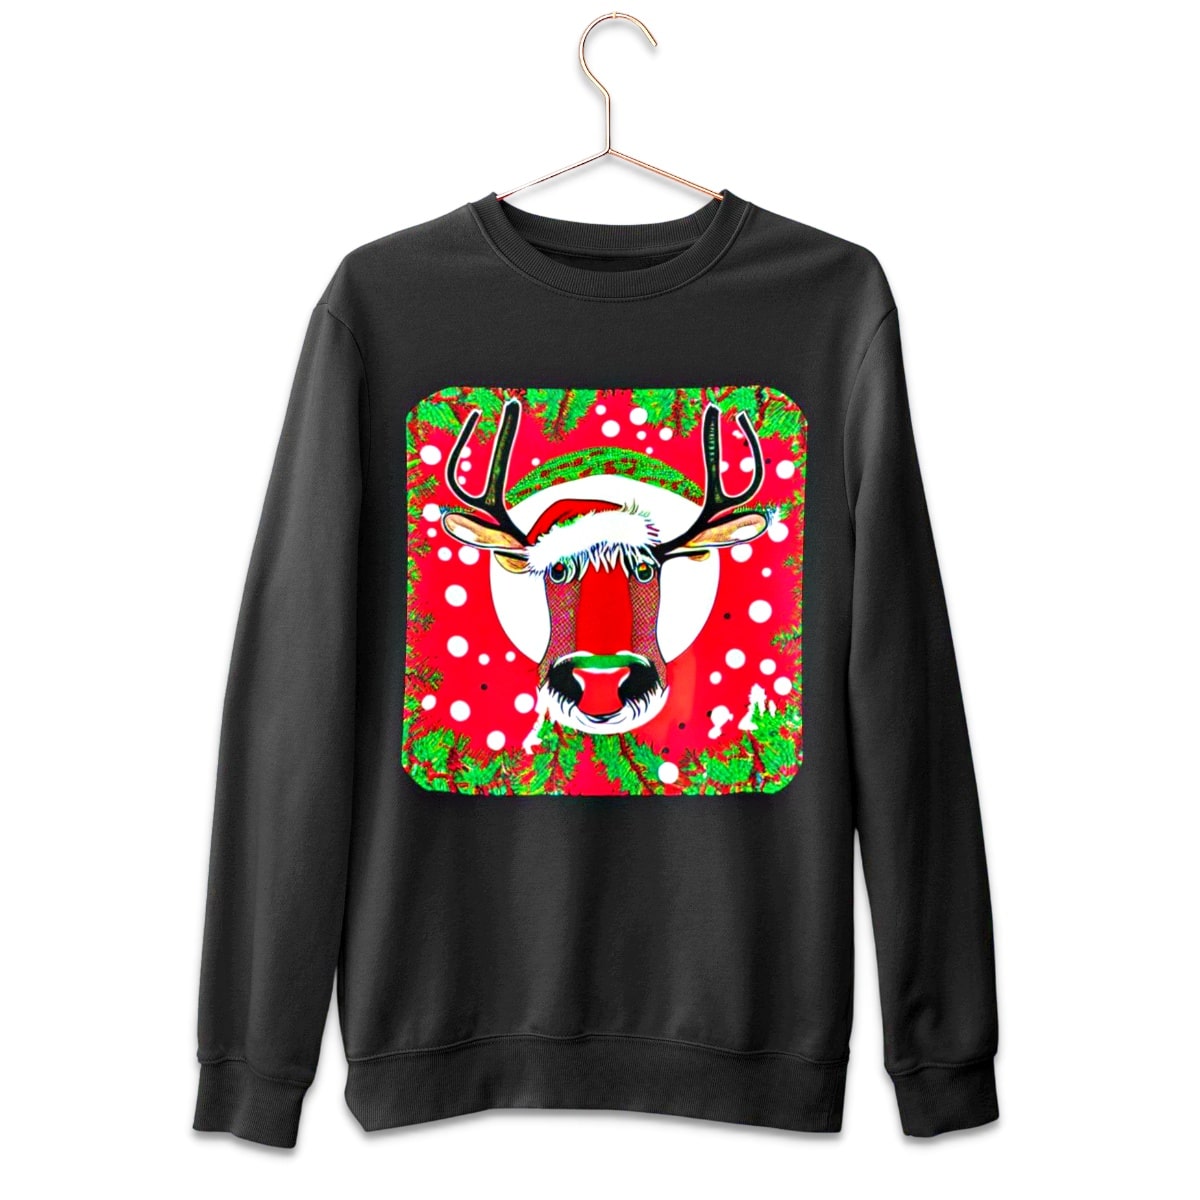 Trippy Reindeer Christmas Sweater - Santaland